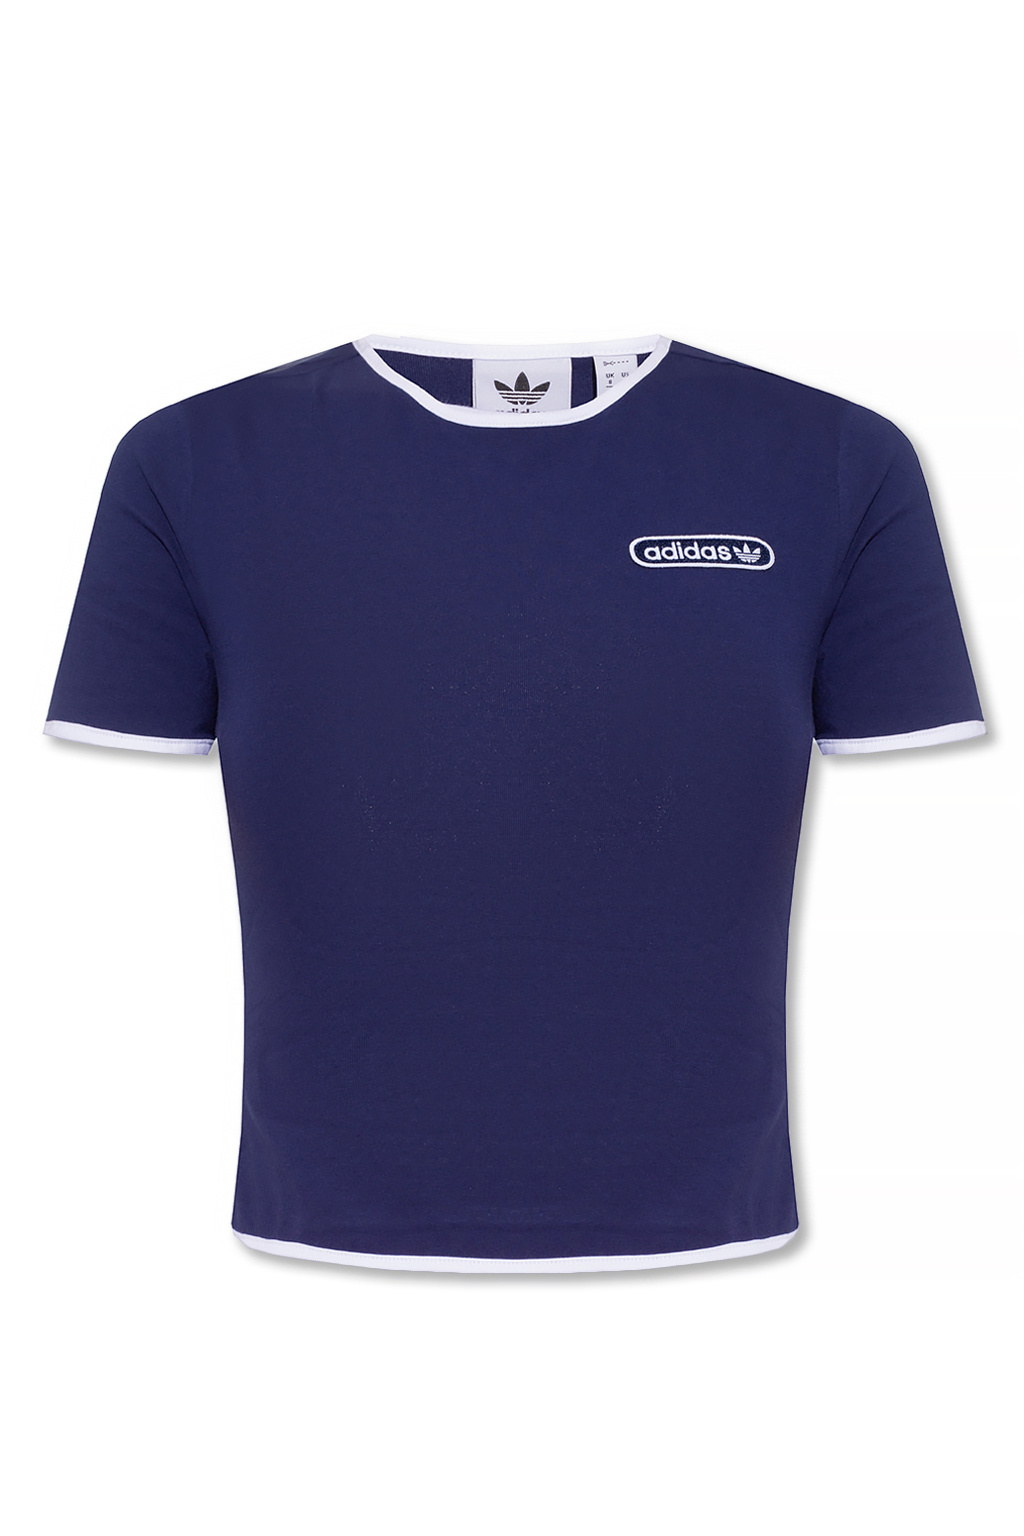 Filles - Navy - ADIDAS Australia - Originals blue adidas T Junior IetpShops Entraînement Logo Tights shirt Stripe 3